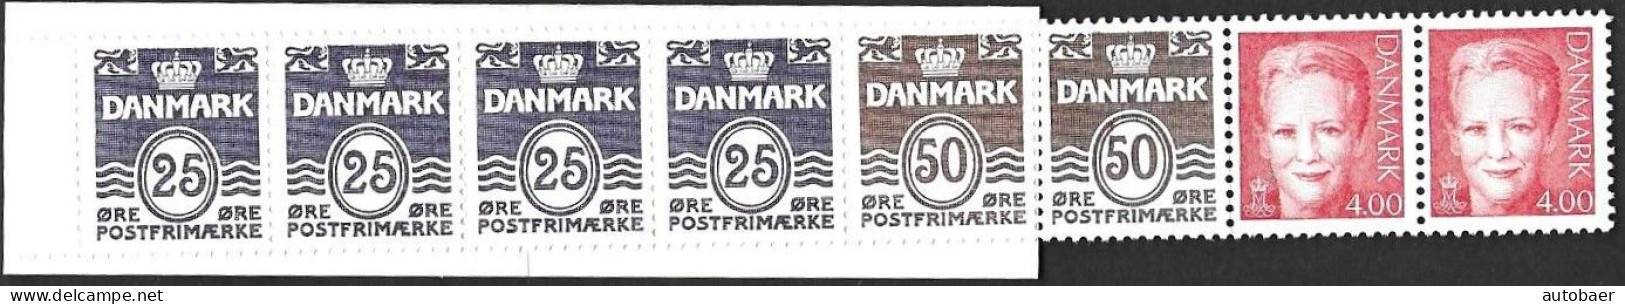 Denmark Danmark 2000 Queen Margrethe Michel No. MH 60 Carnet Booklet Mint MNH Neuf Postfrisch ** - Carnets